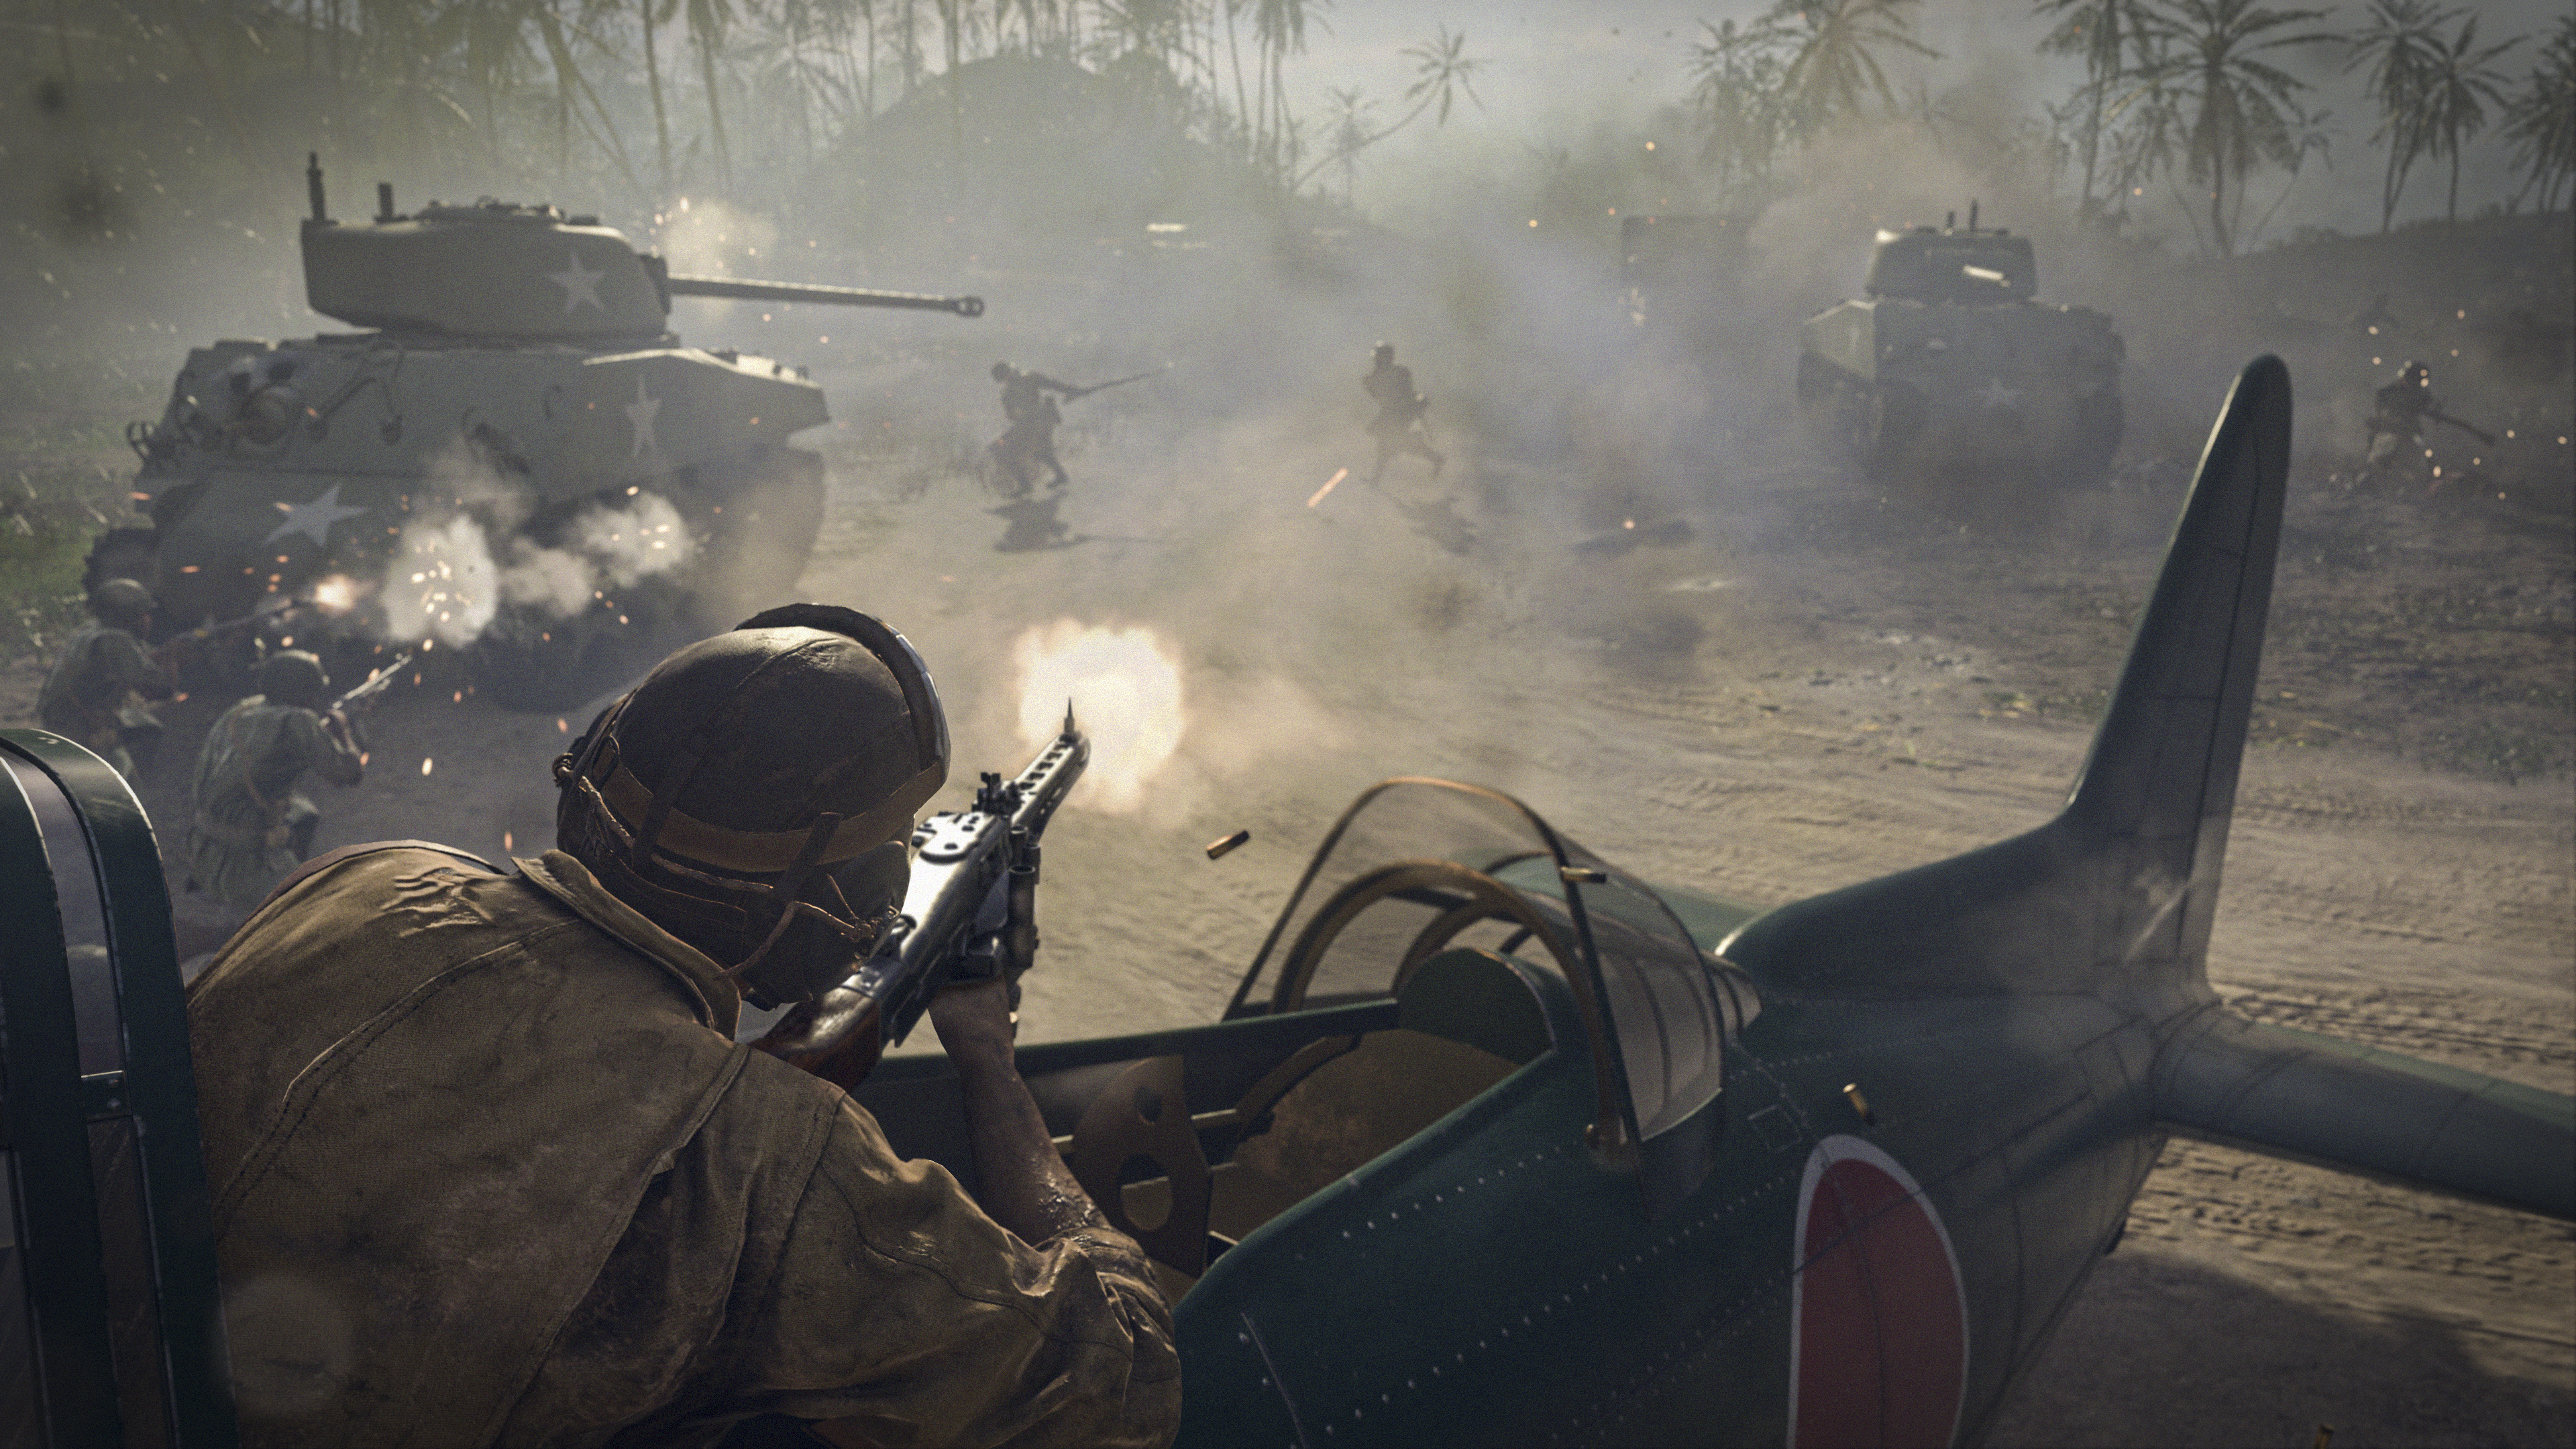 Captura de pantalla de Call of Duty Vanguard que muestra a un piloto disparando un arma desde un avión